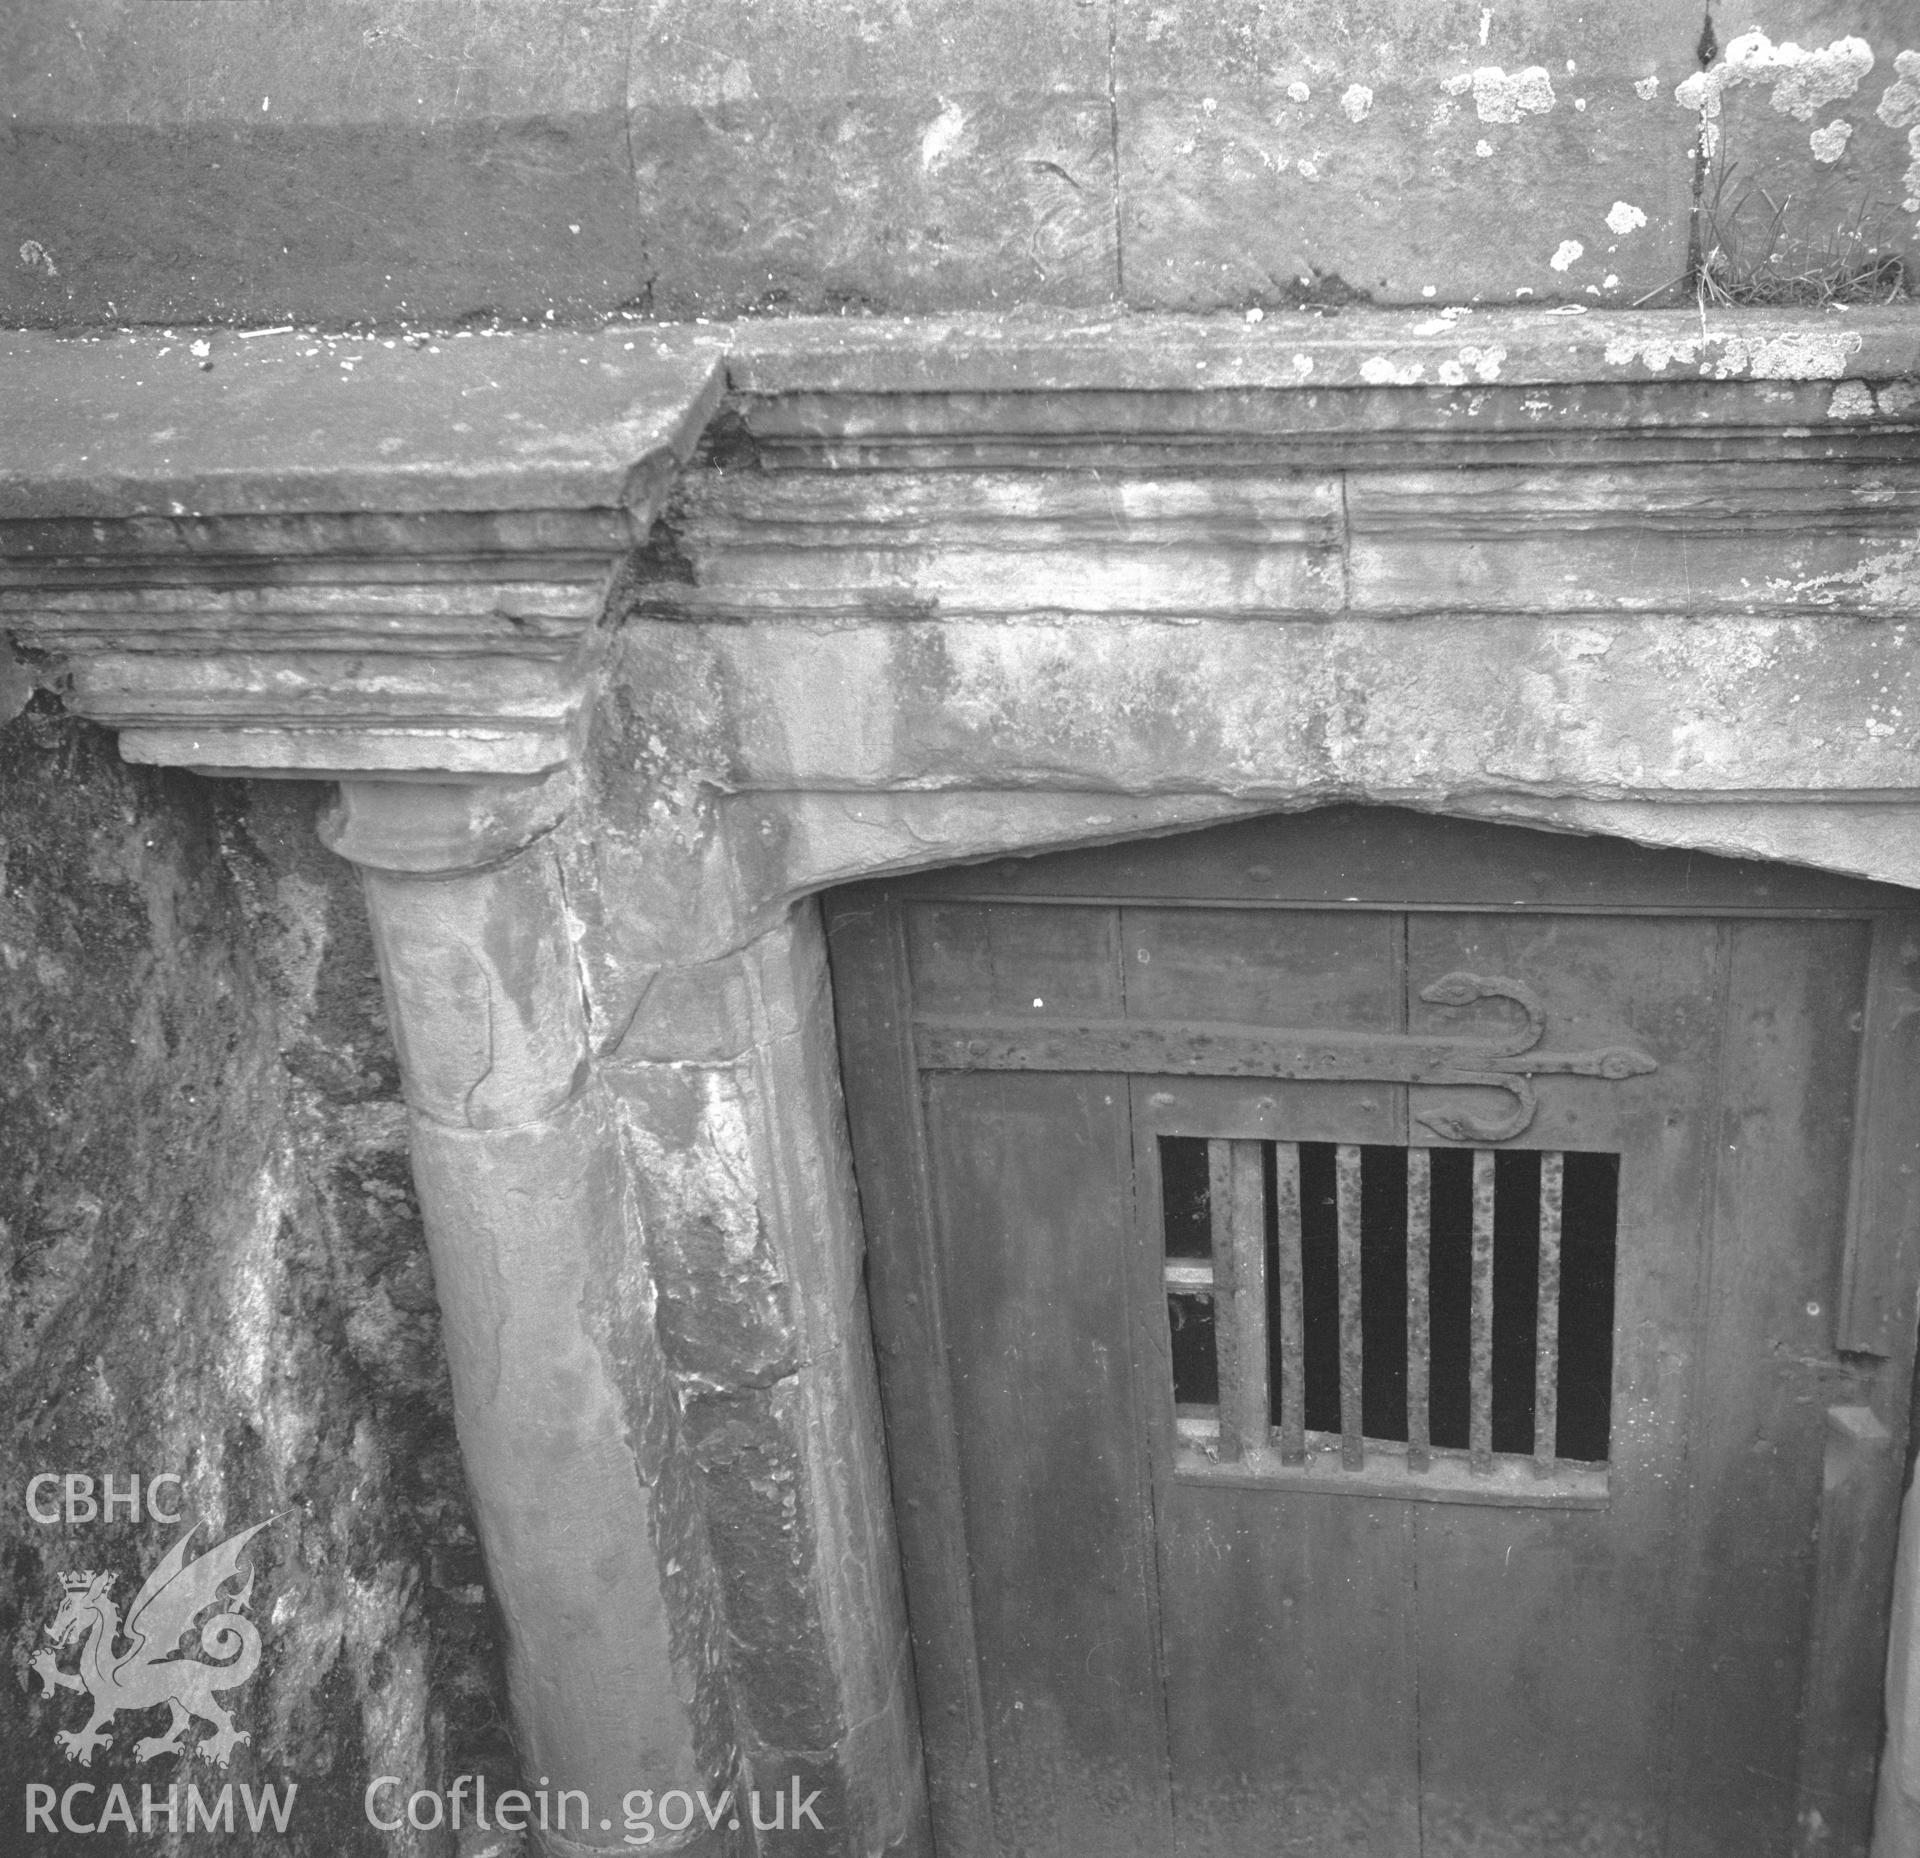 Digital copy of an undated nitrate negative showing detail view of exterior door at Bodrhyddan Hall, Rhuddlan, Flintshire.